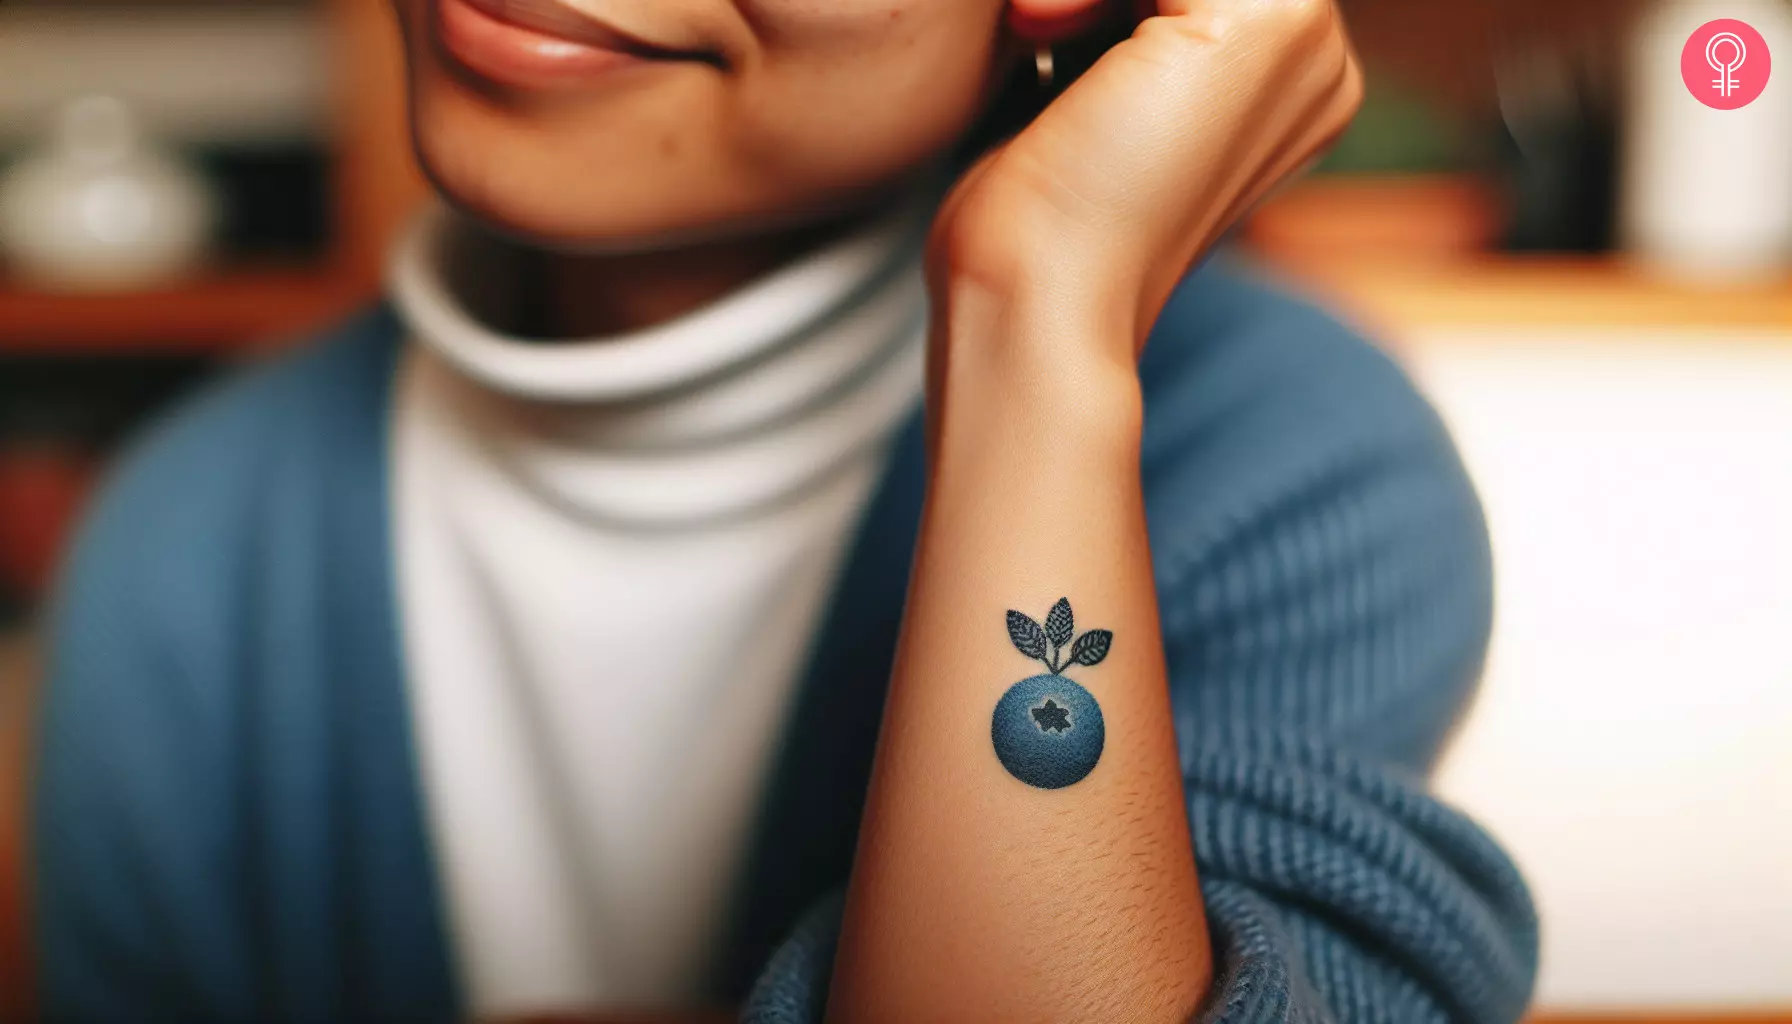 A single blueberry tattoo near the wrist of a woman